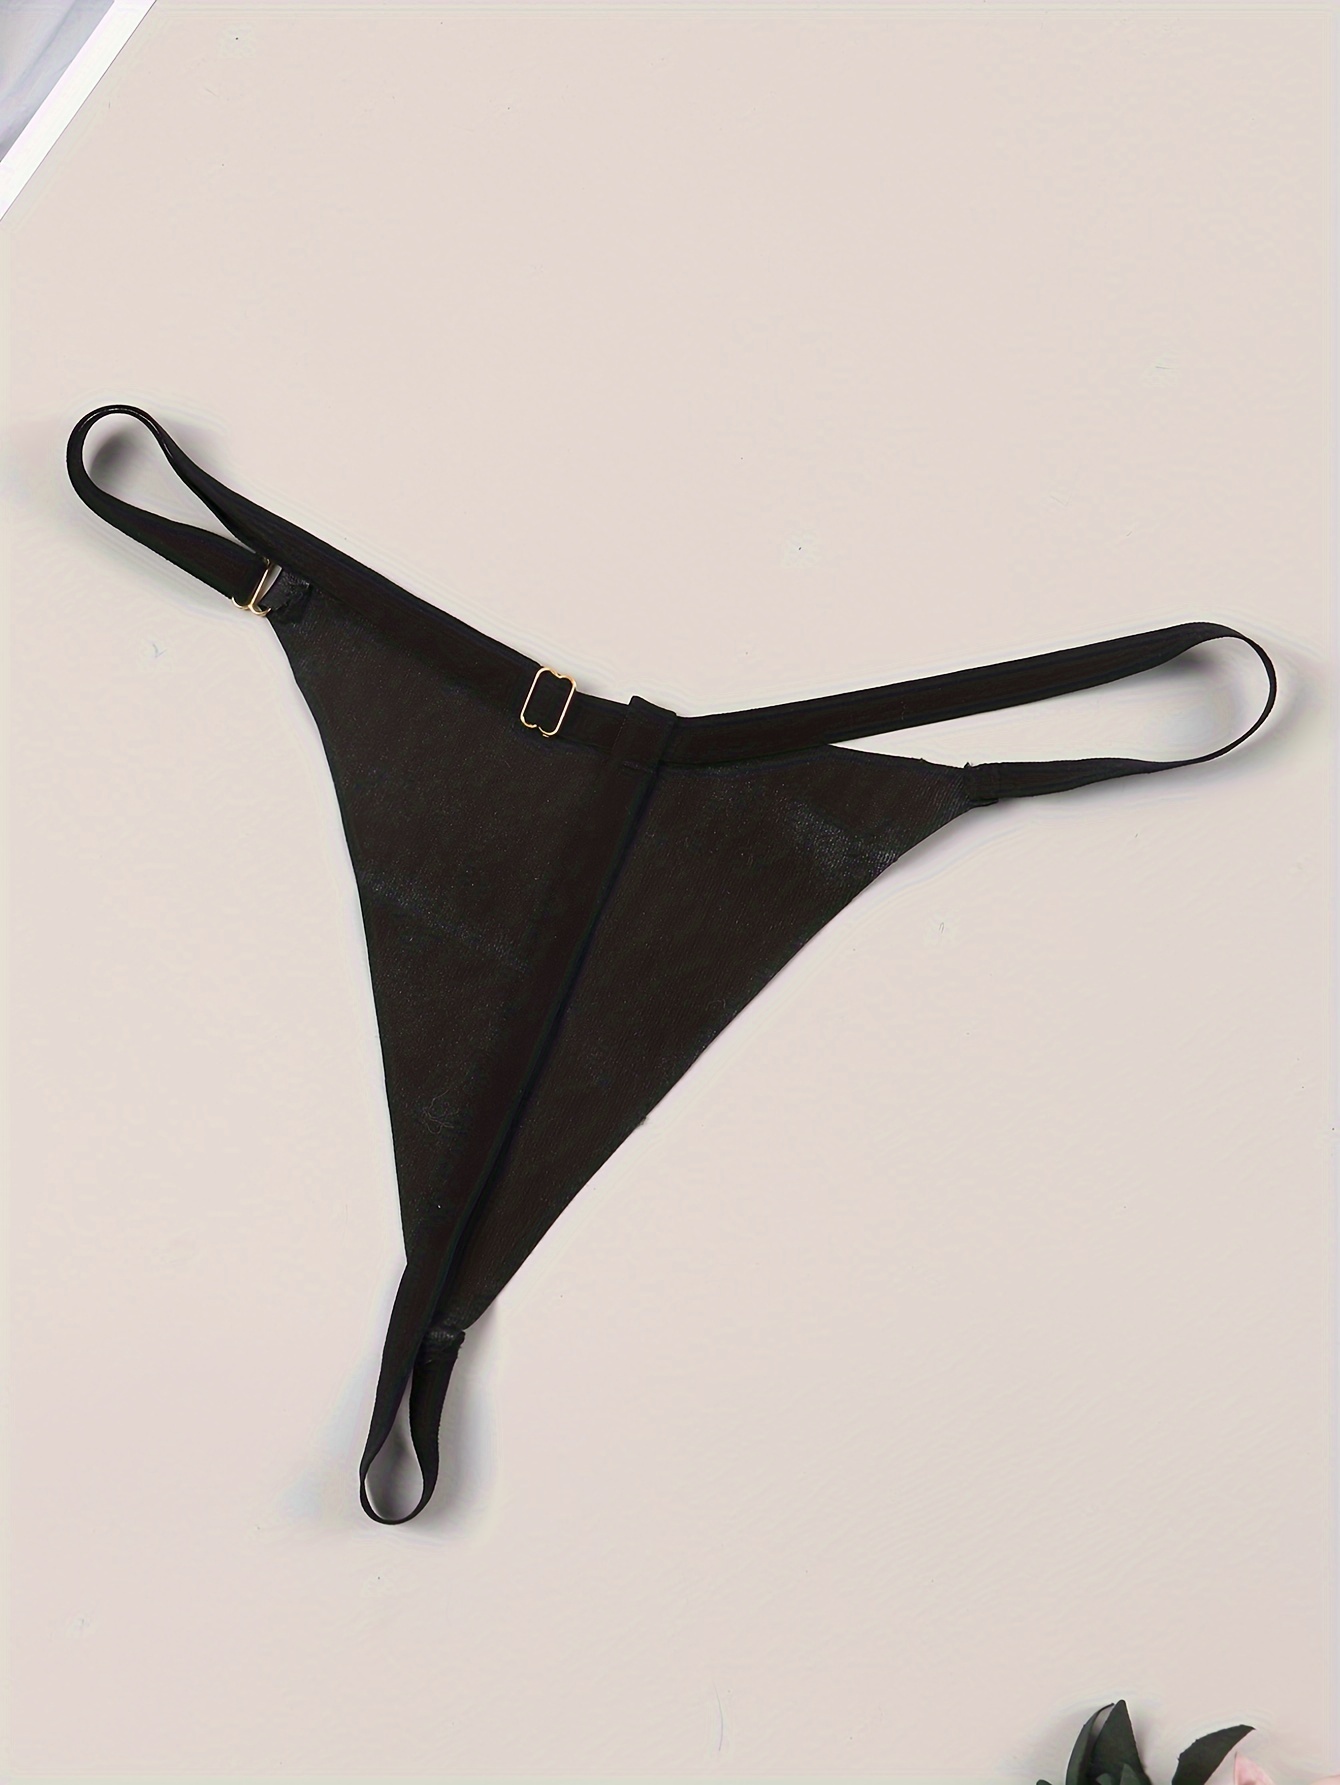 No-Show Thong Panty, Black, XL - Women's Panties - Victoria's